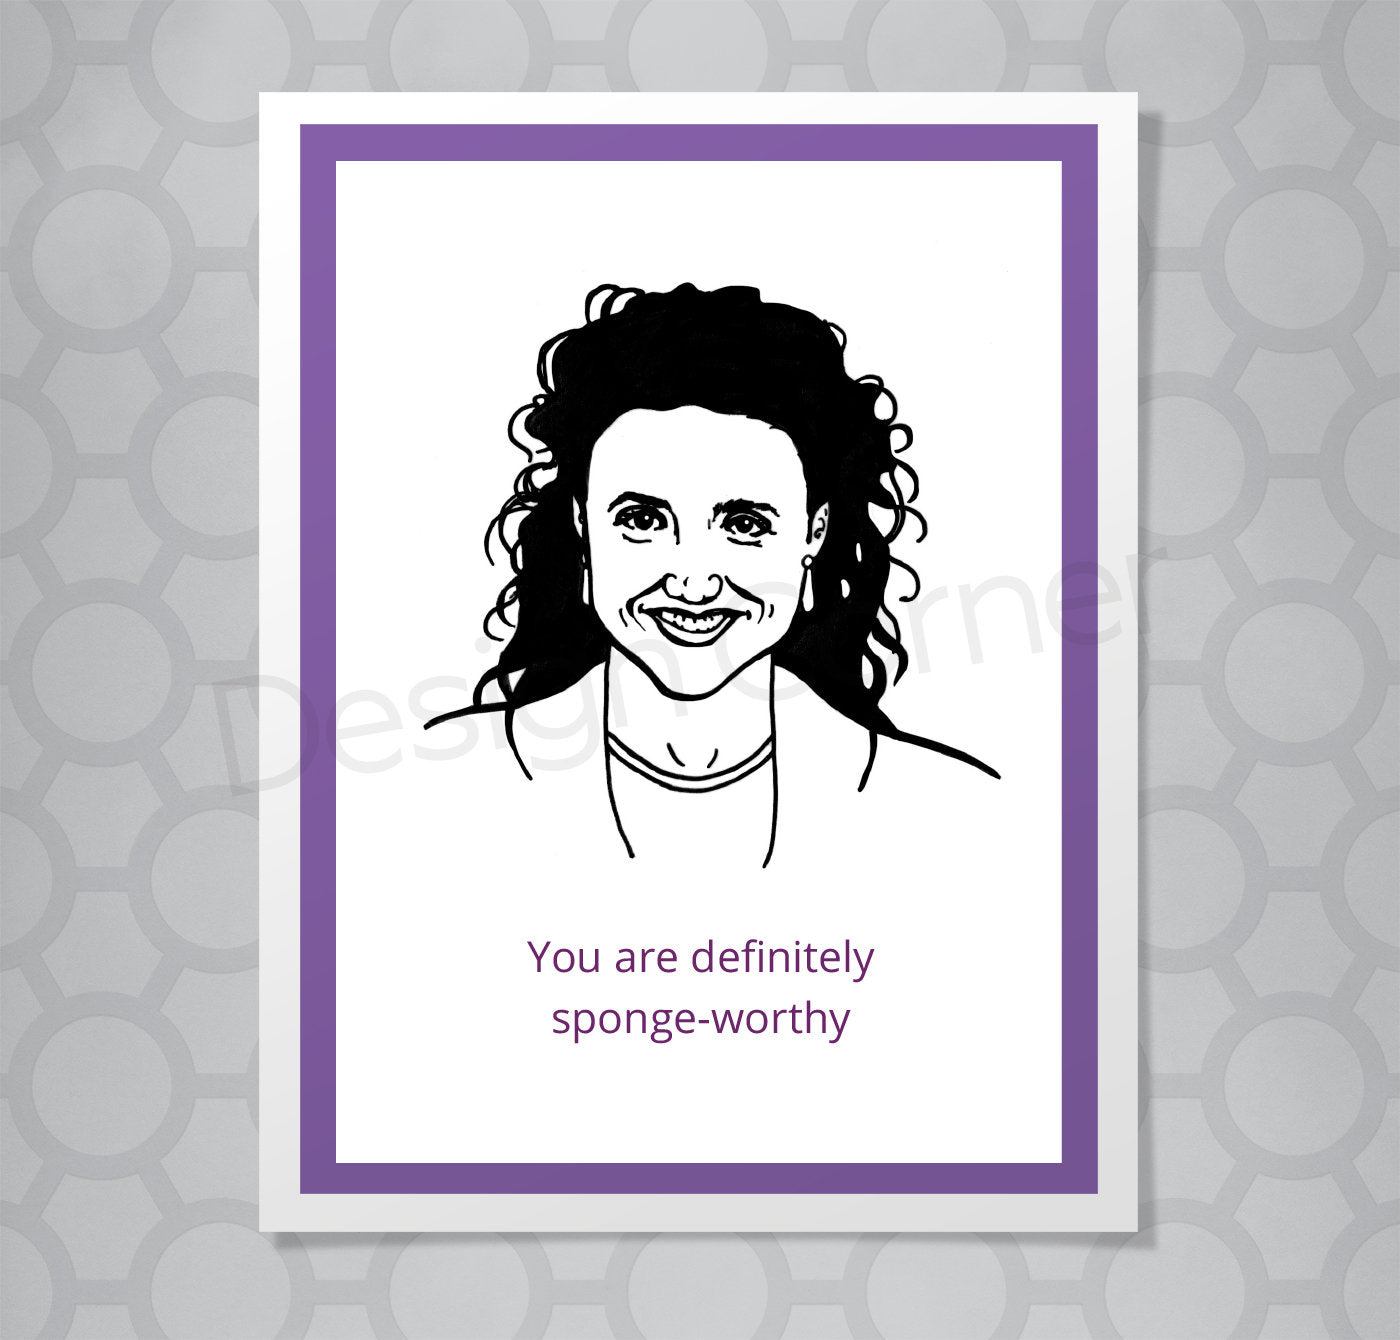 Greeting card with illustration of Seinfeld's Elaine. Caption says "You are definitely sponge-worthy."